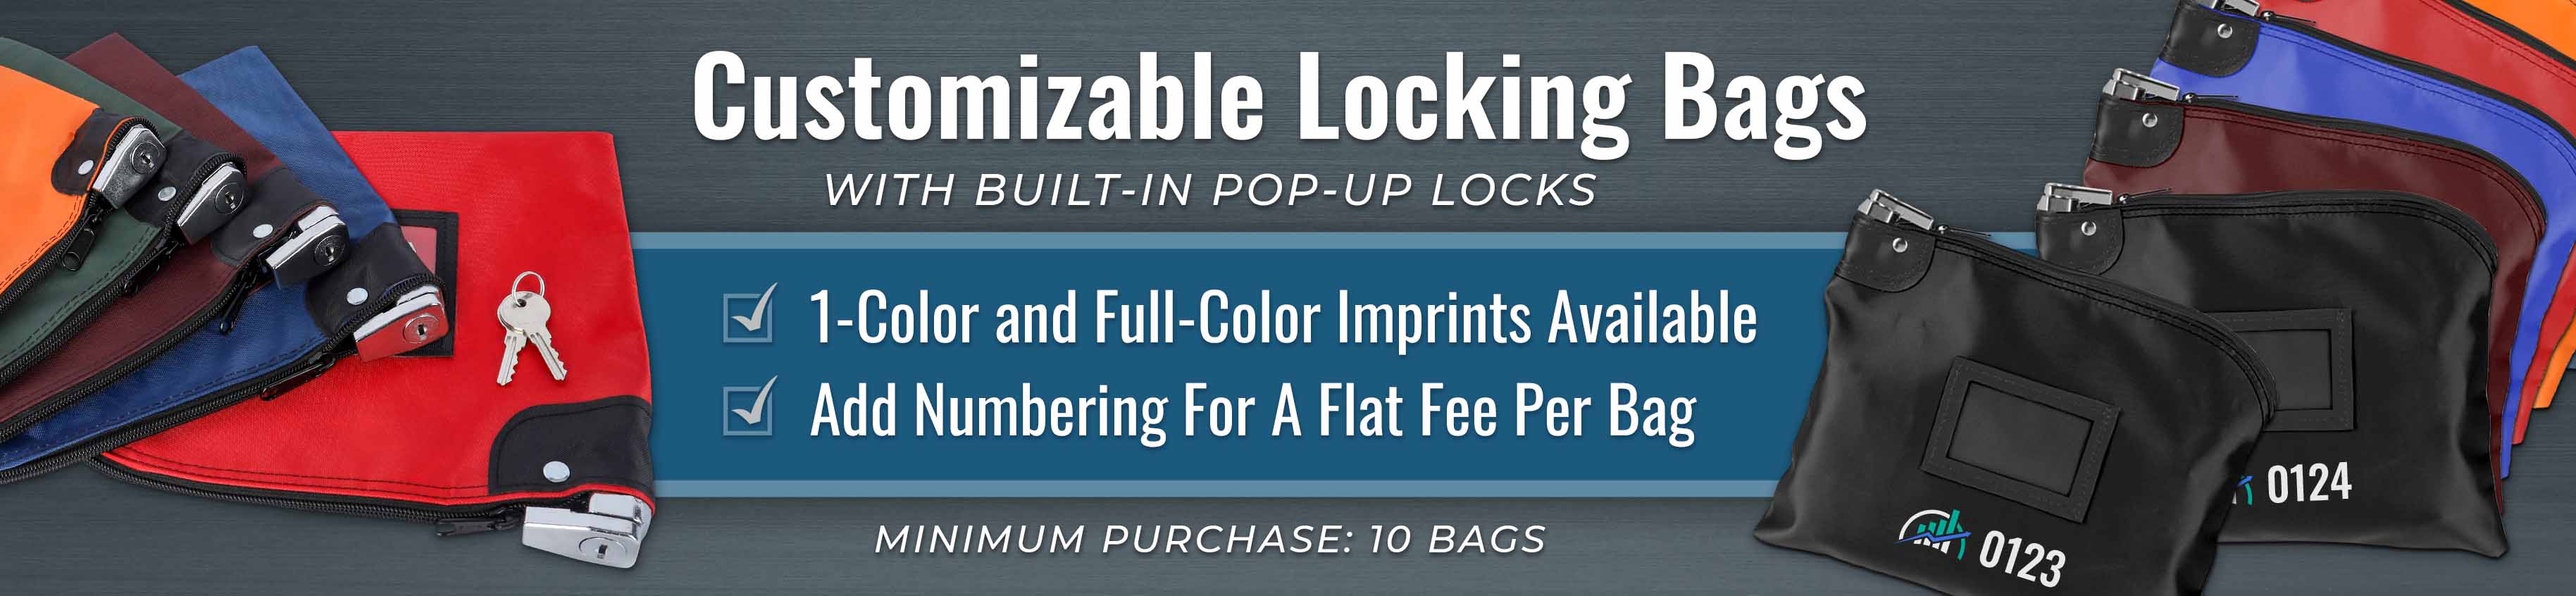 Customizable Locking Bags